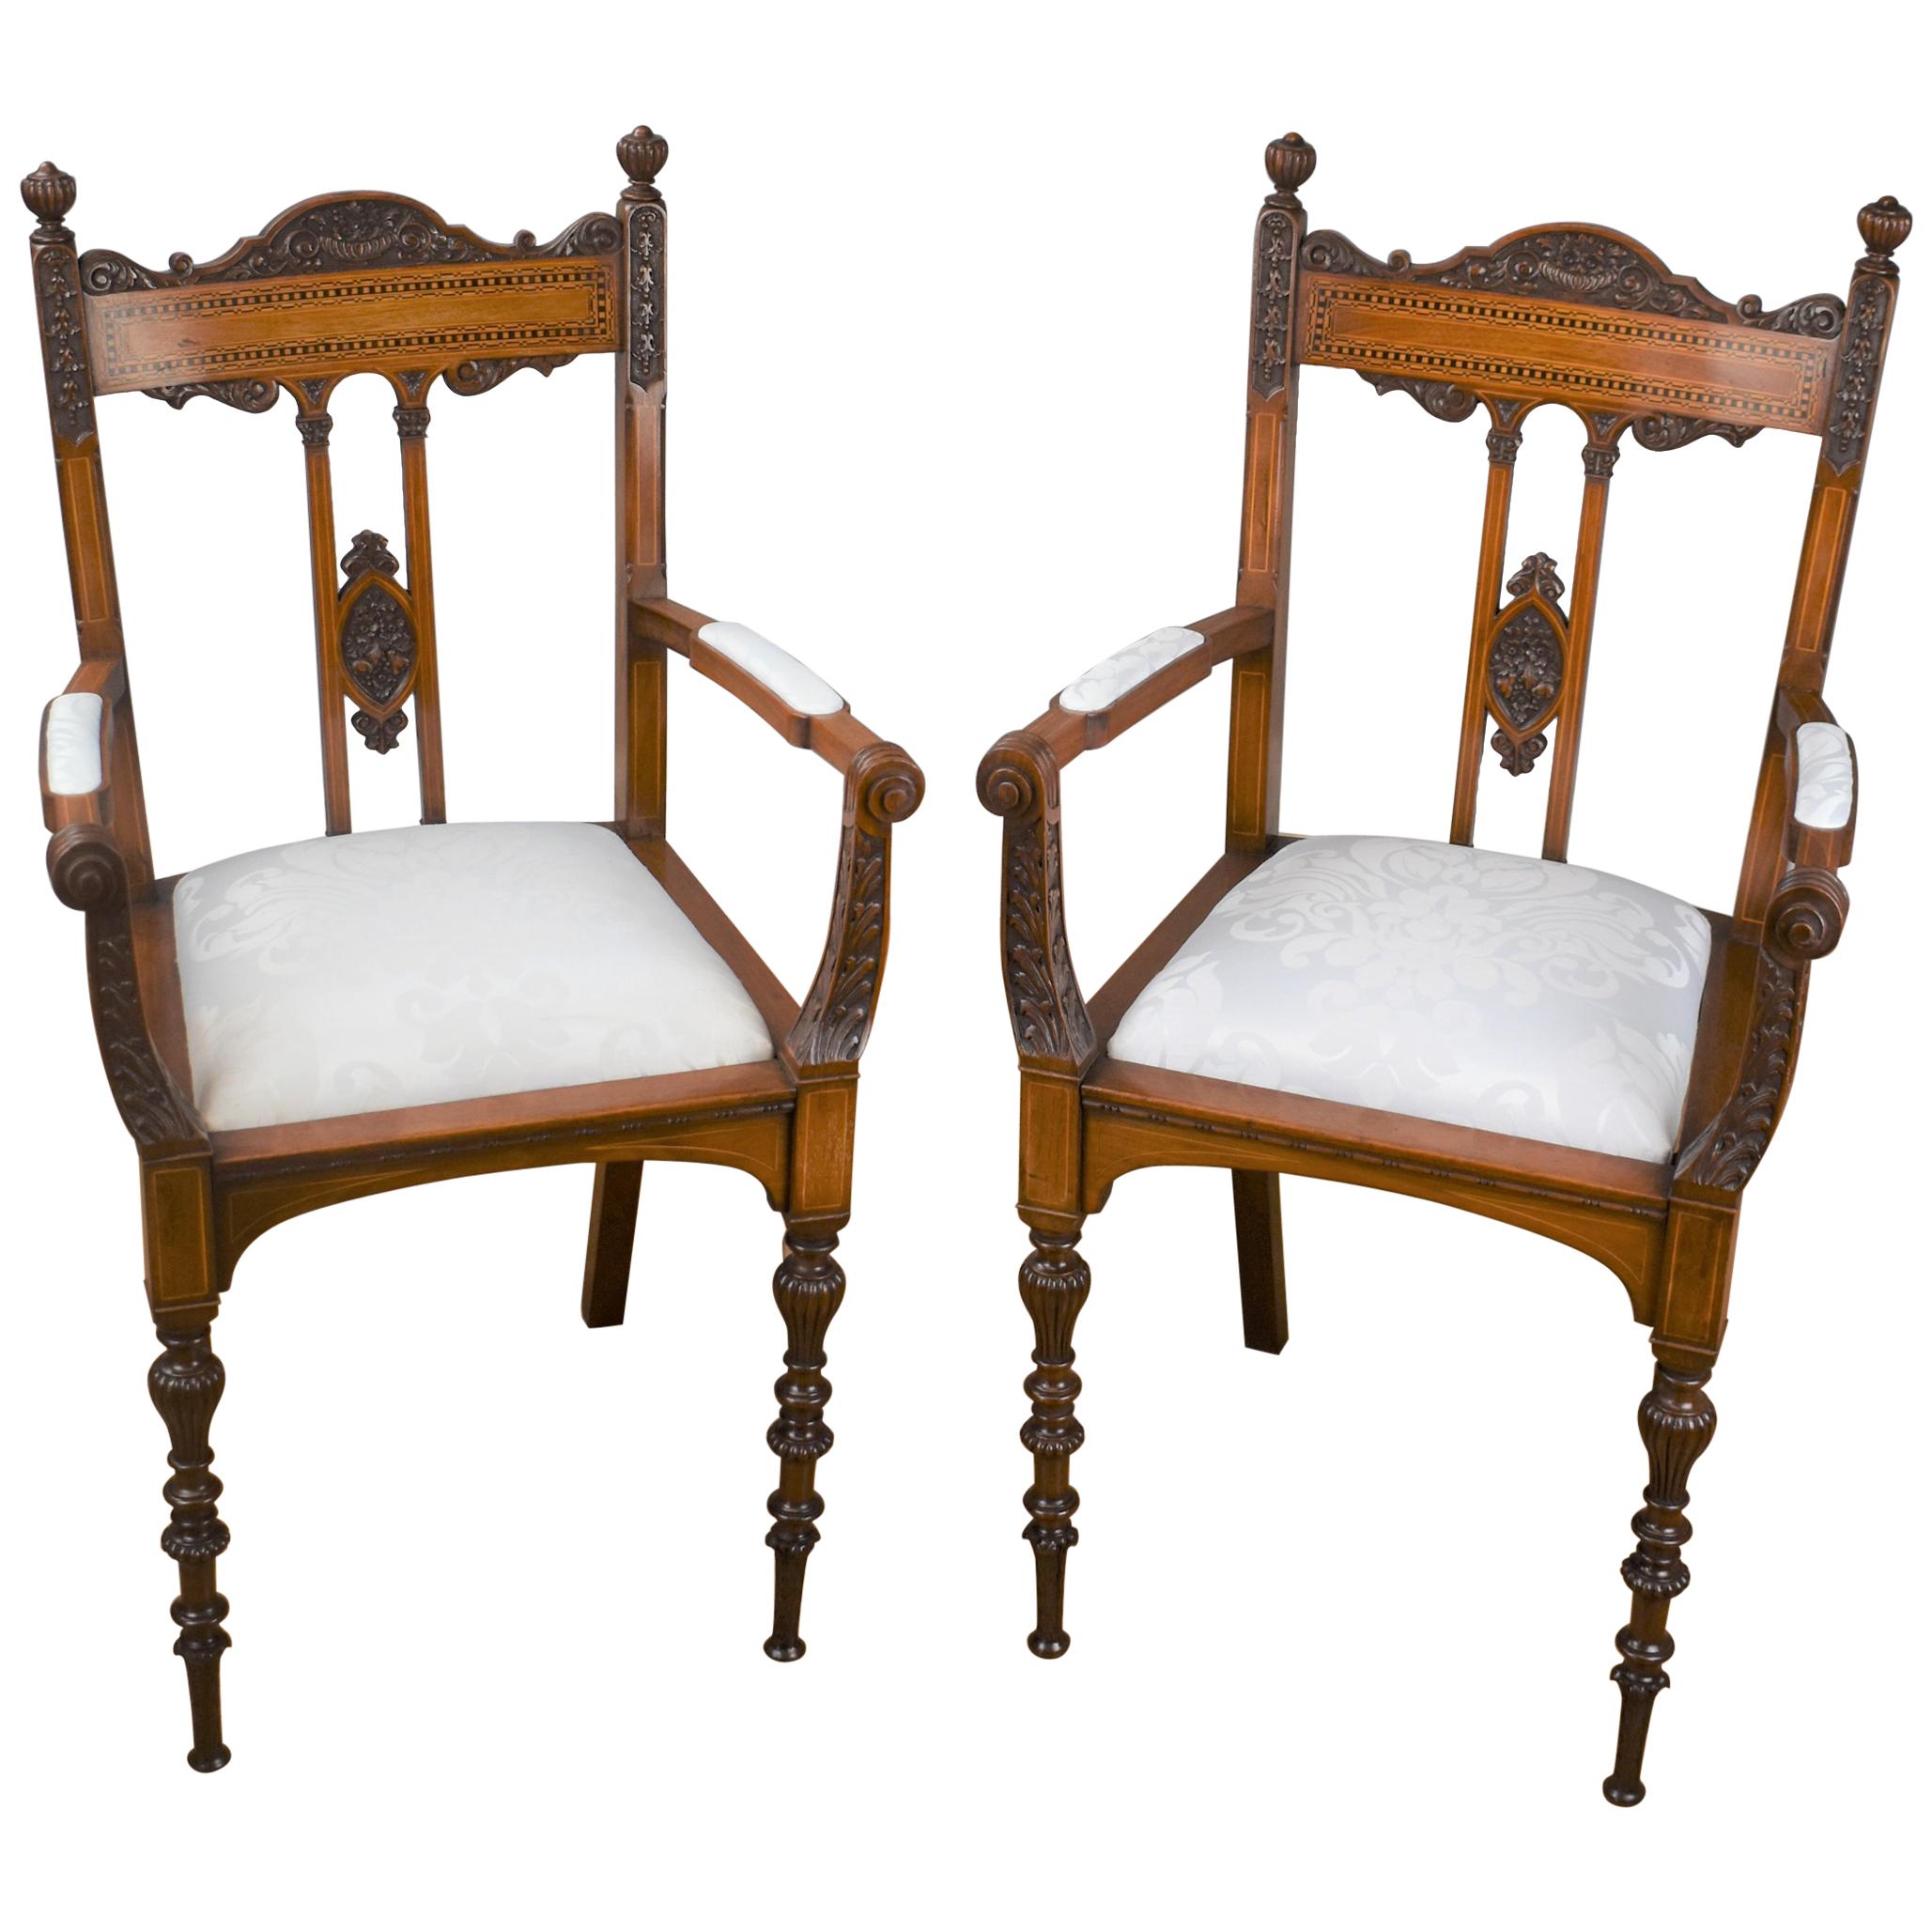 Superb Quality Victorian Mahogany Chairs